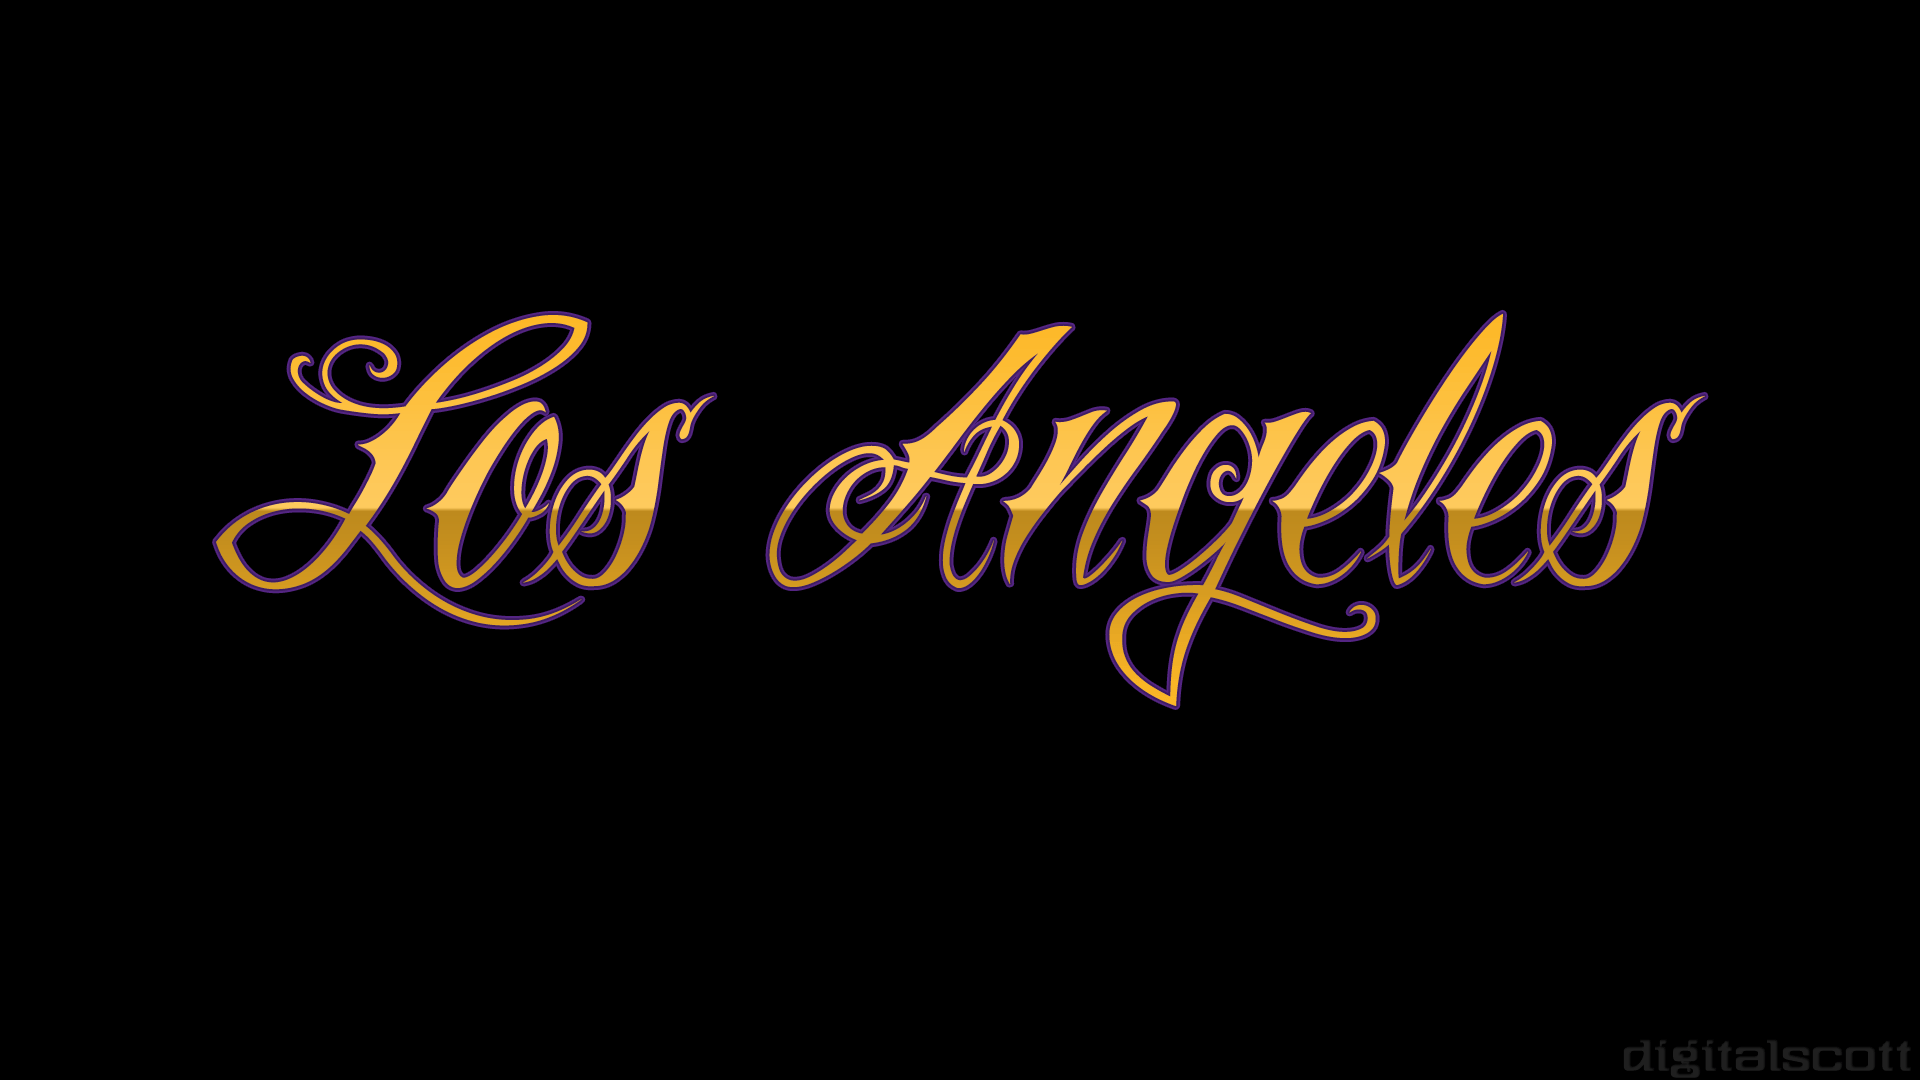 Los Angeles Lakers Wallpaper Image